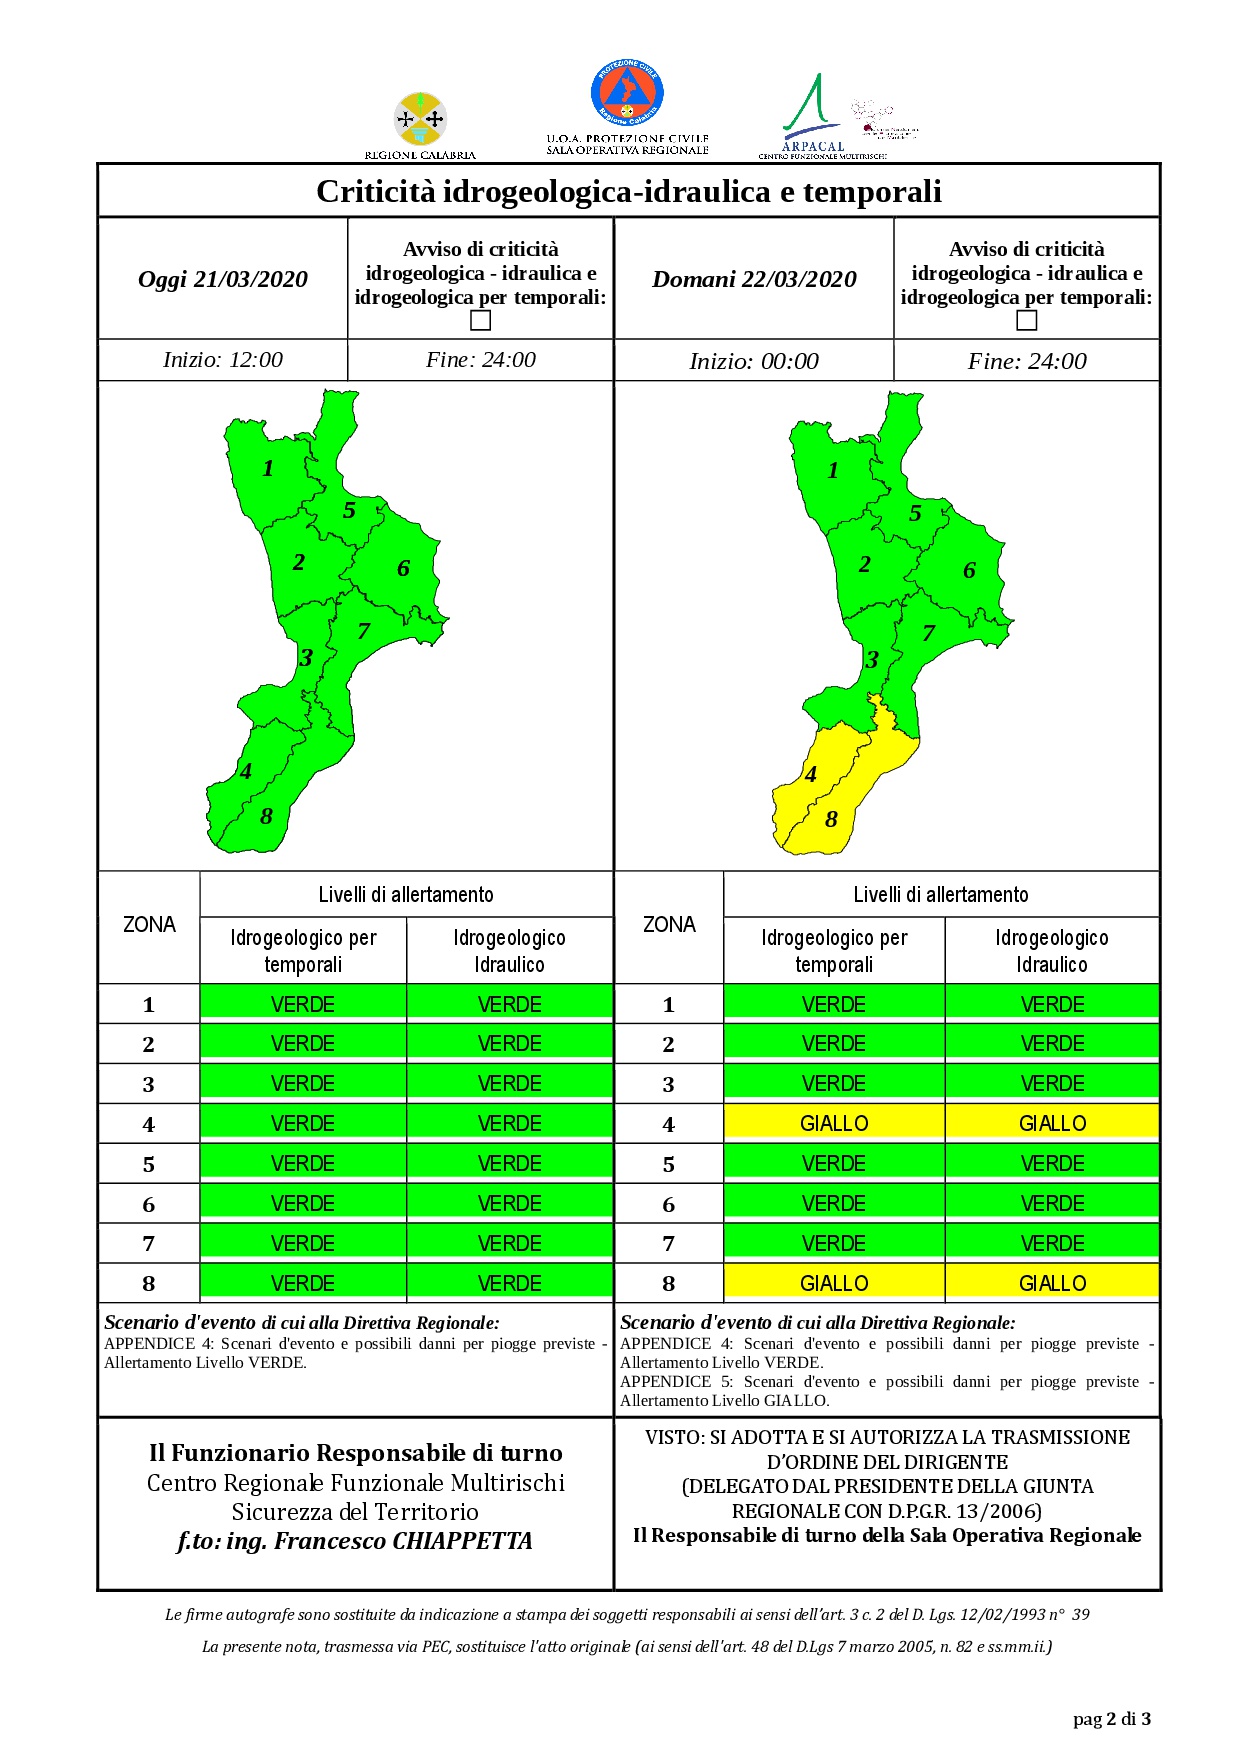 Criticità idrogeologica-idraulica e temporali in Calabria 21-03-2020